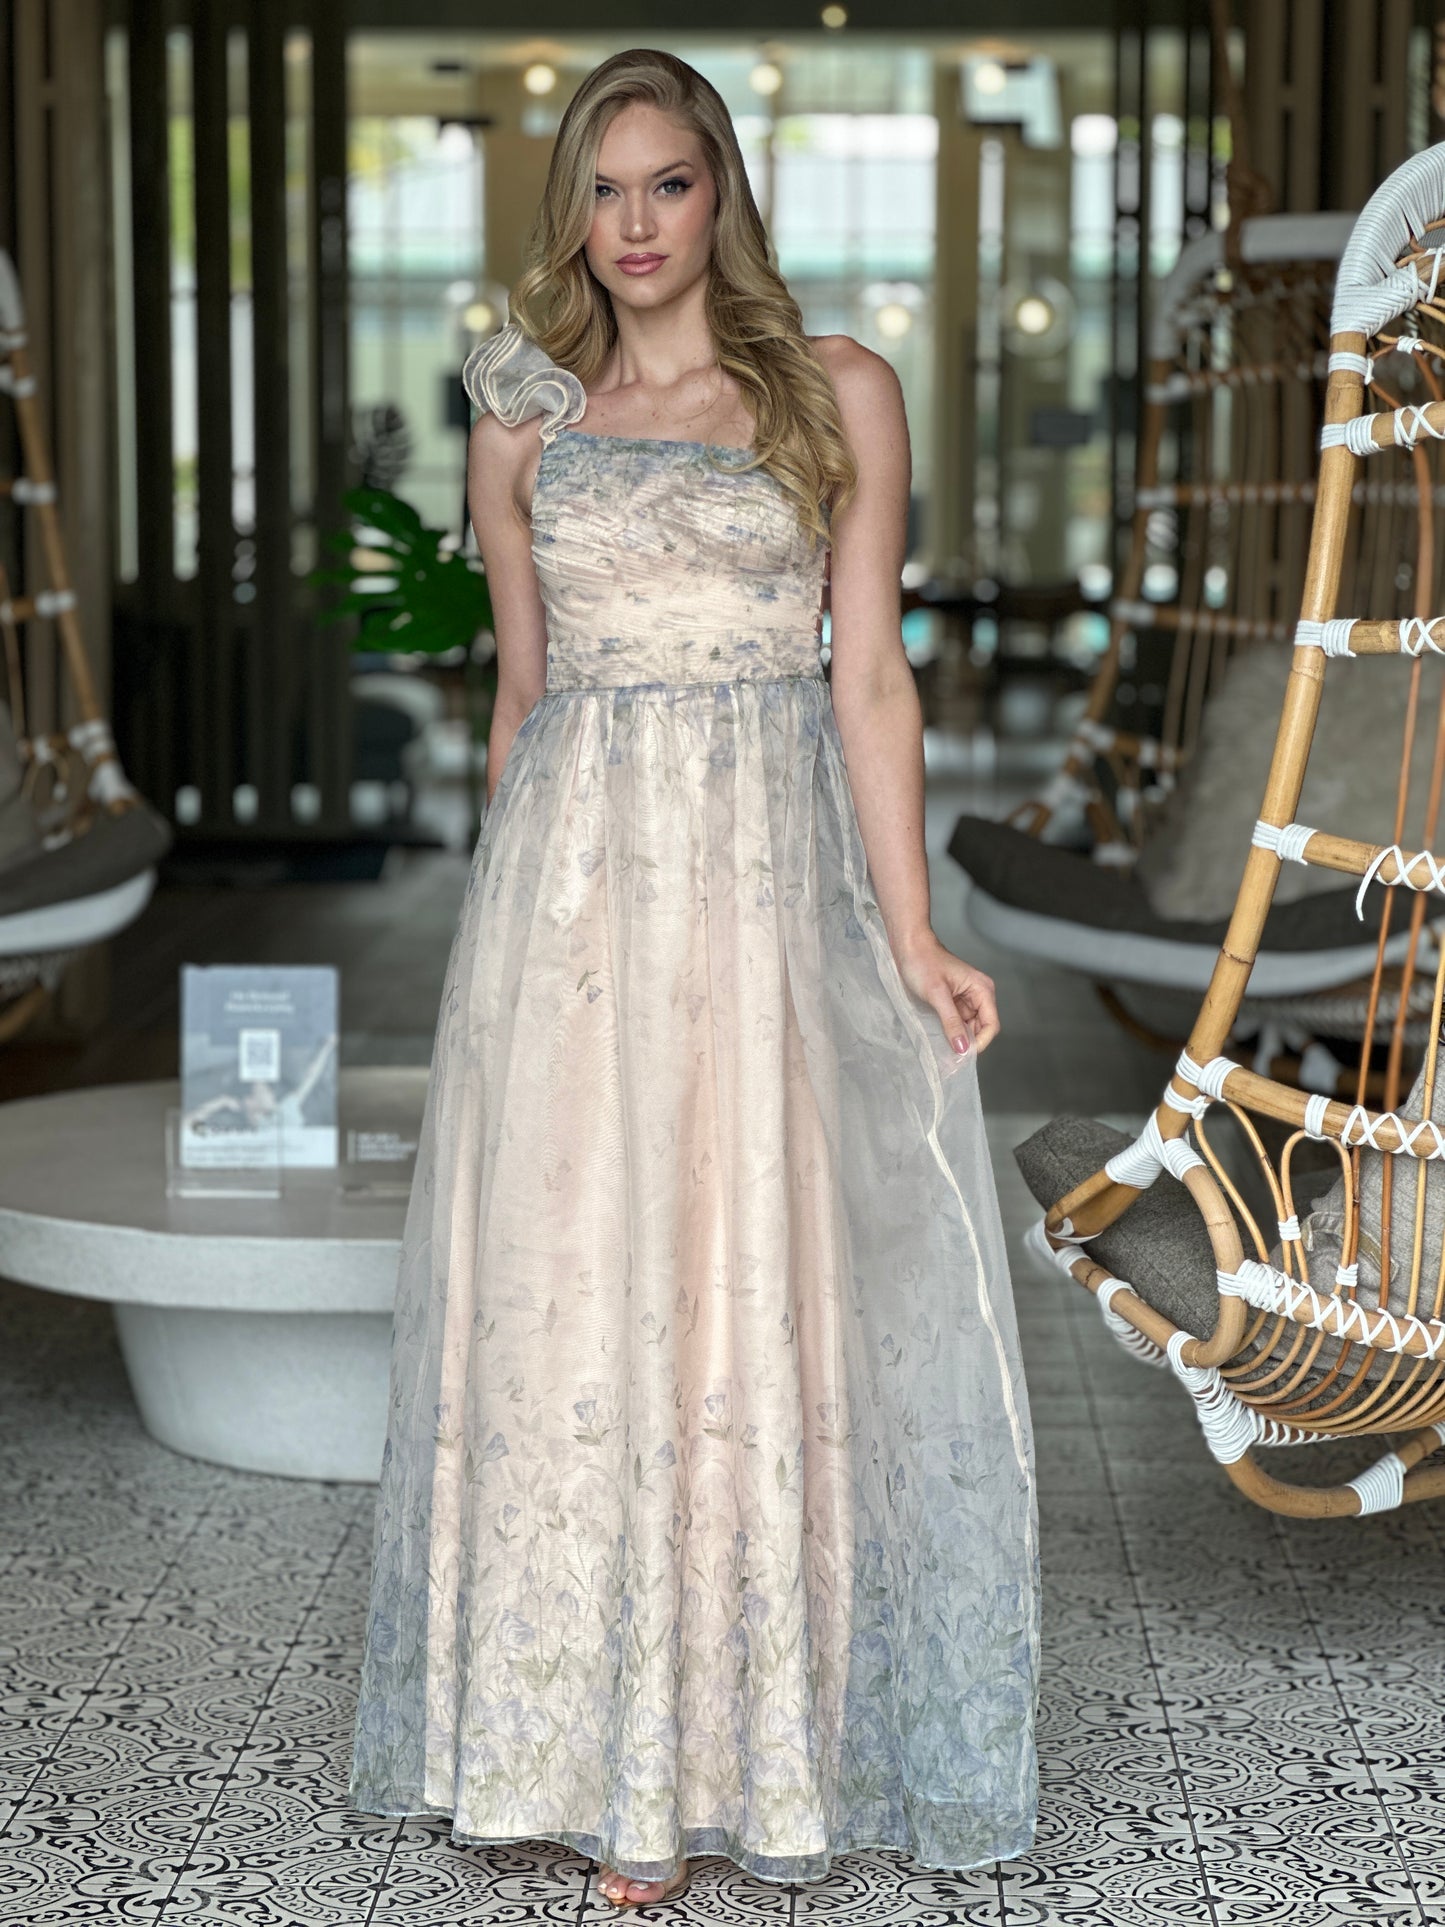 Princess Beige/Gray Tulle Dress Gala